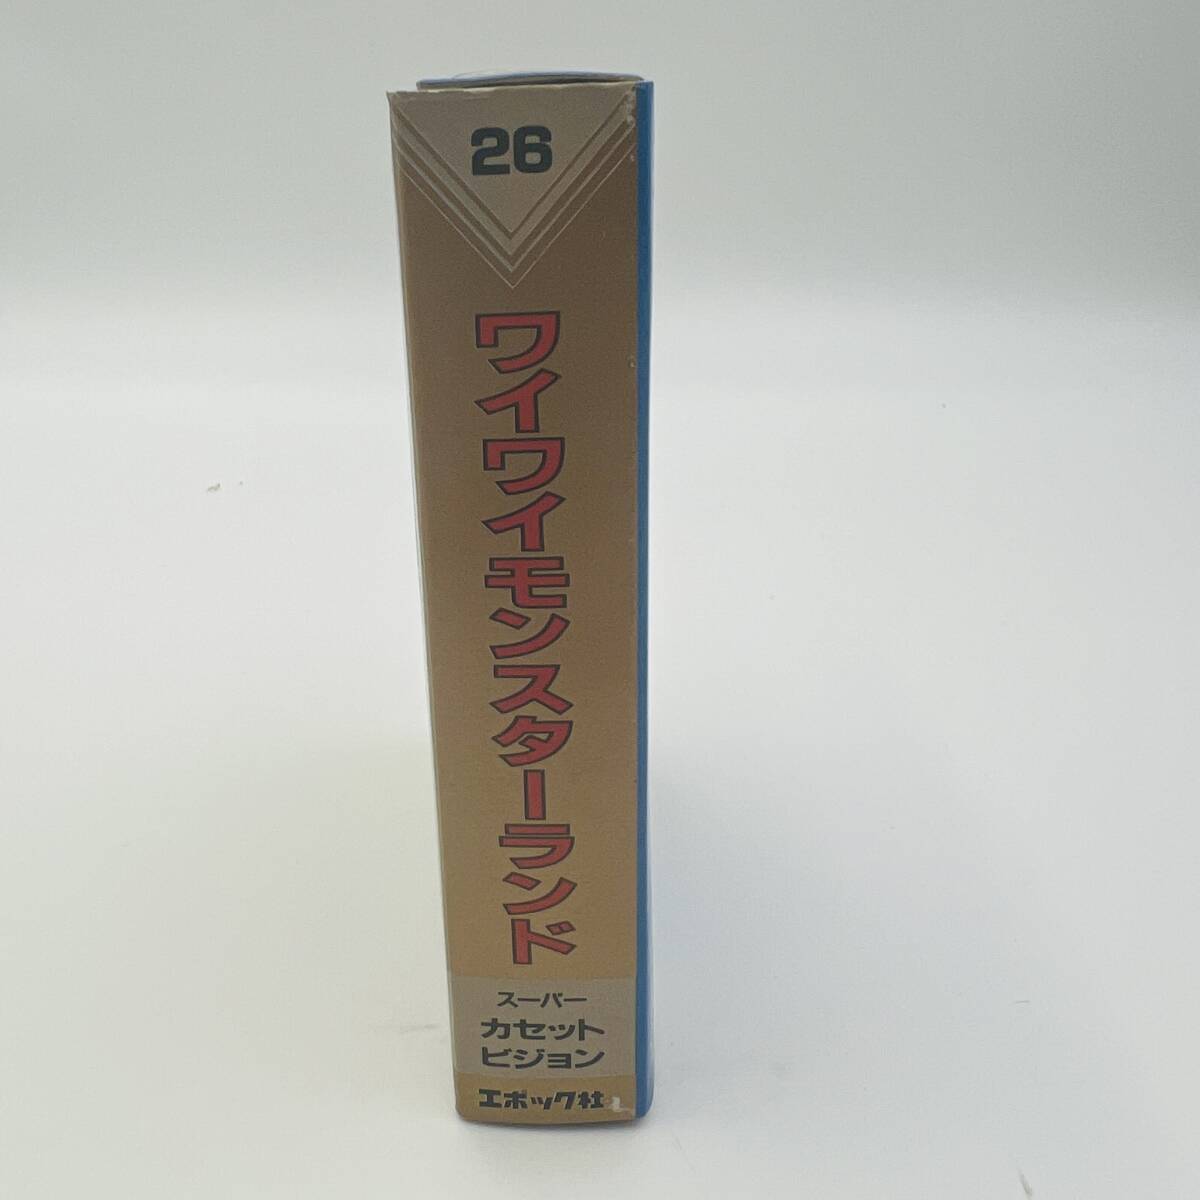 [408E] unused goods super cassette Vision soft waiwai Monstar Land box manual attaching Epo k company TV game toy shop stock disposal goods 